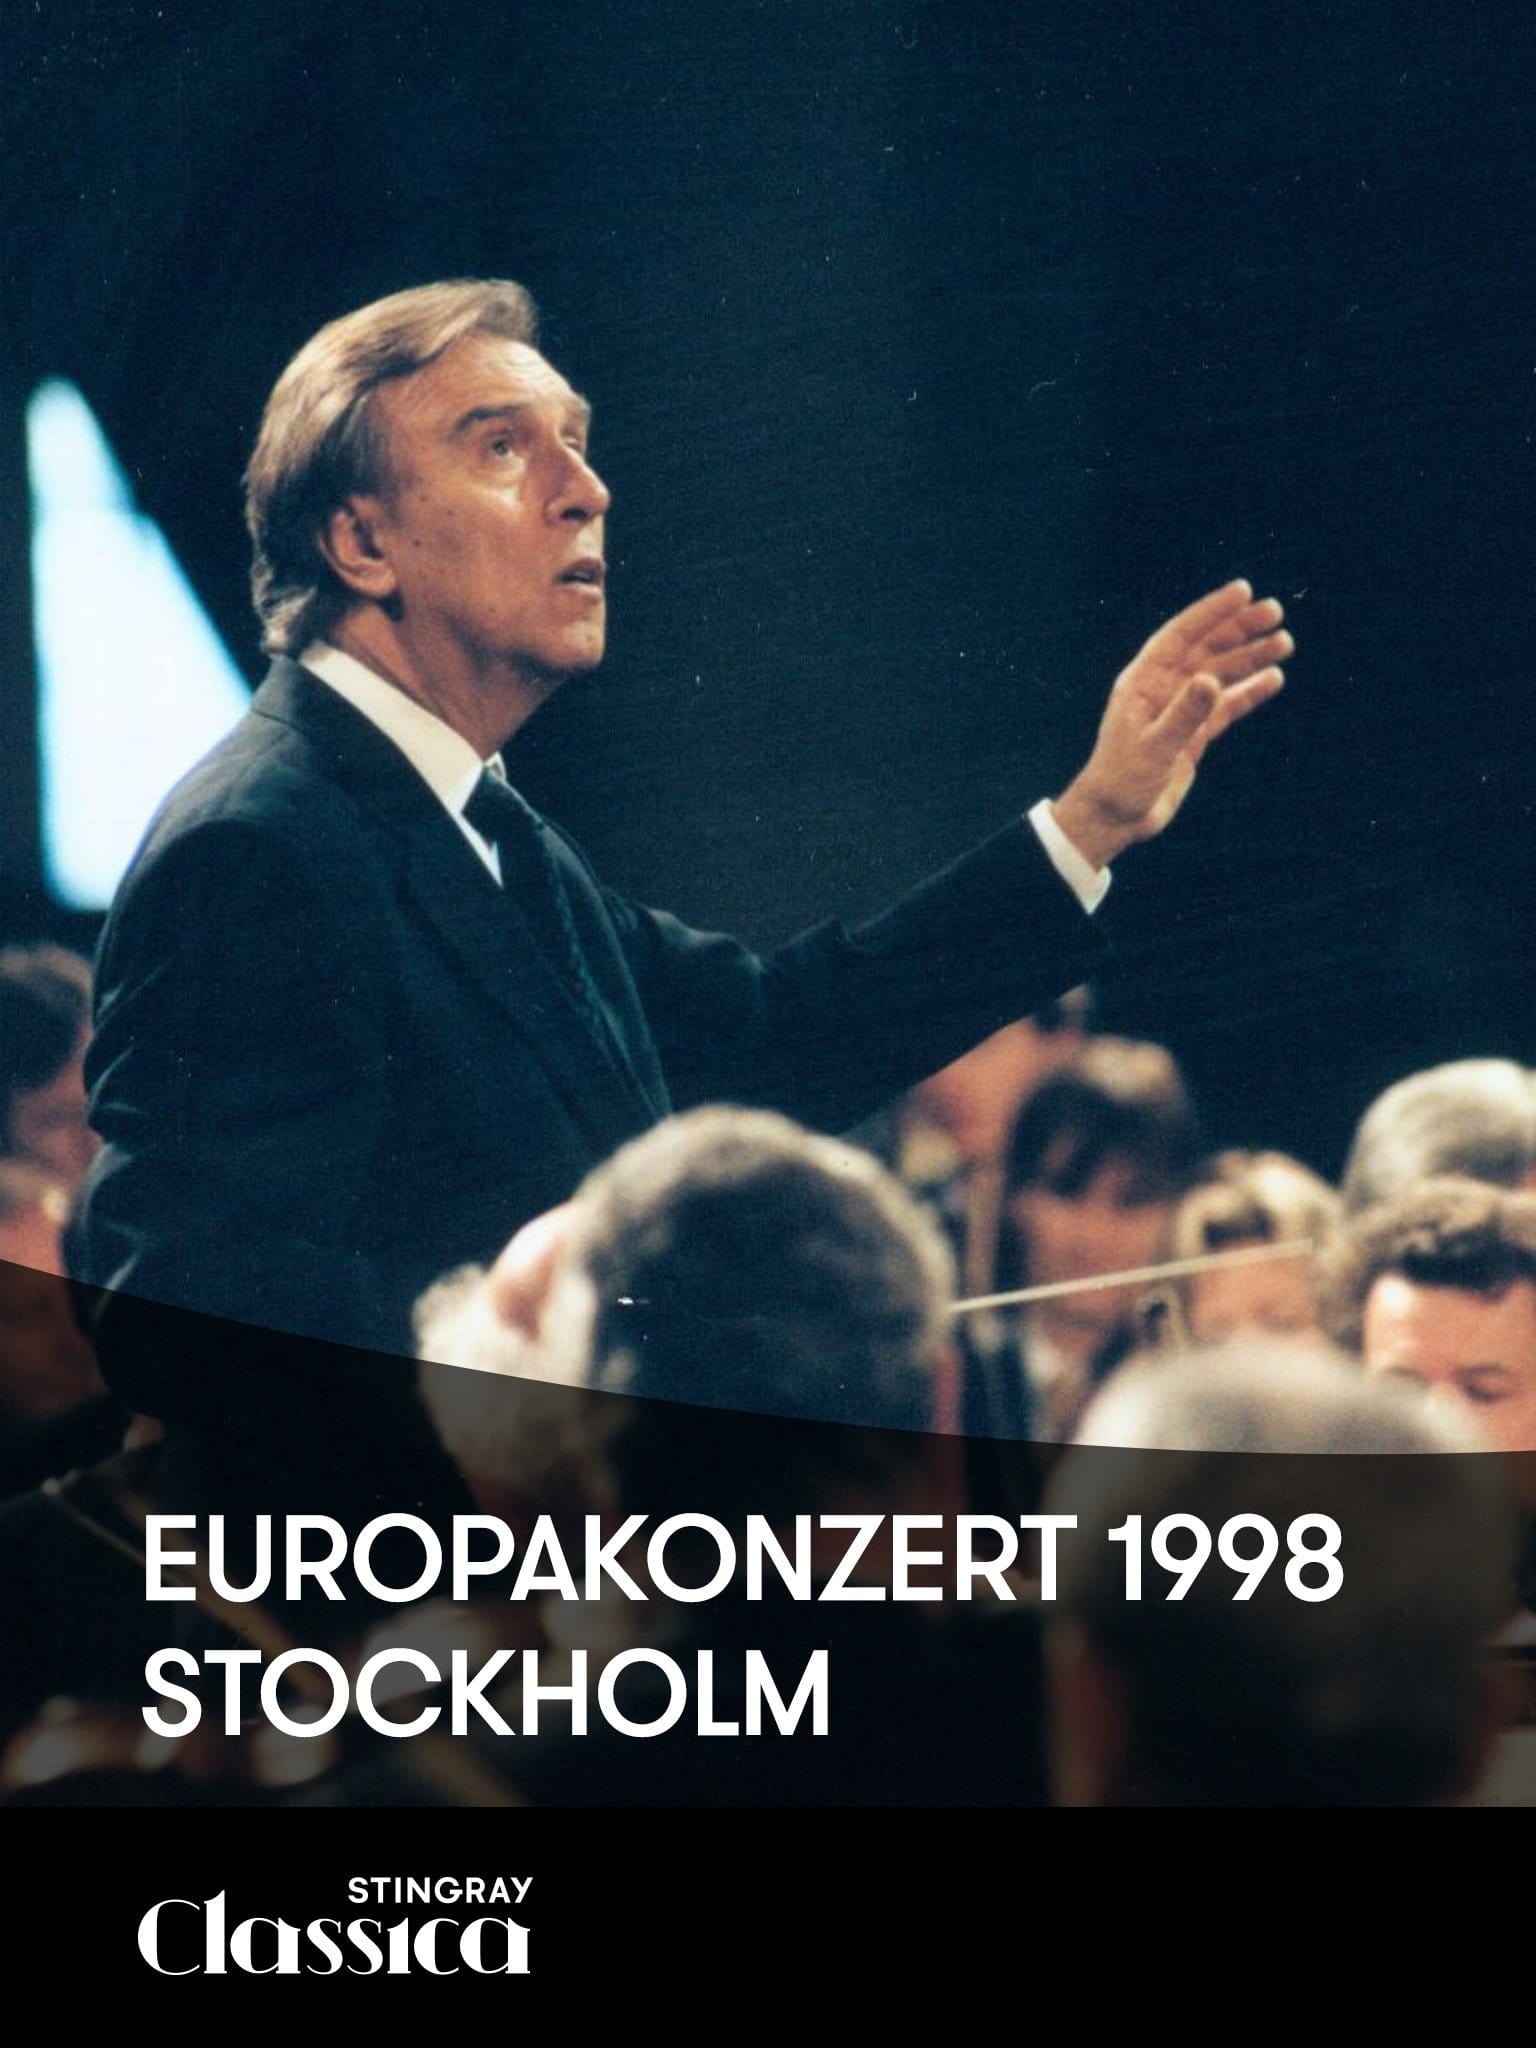 Europakonzert 1998 from Stockholm